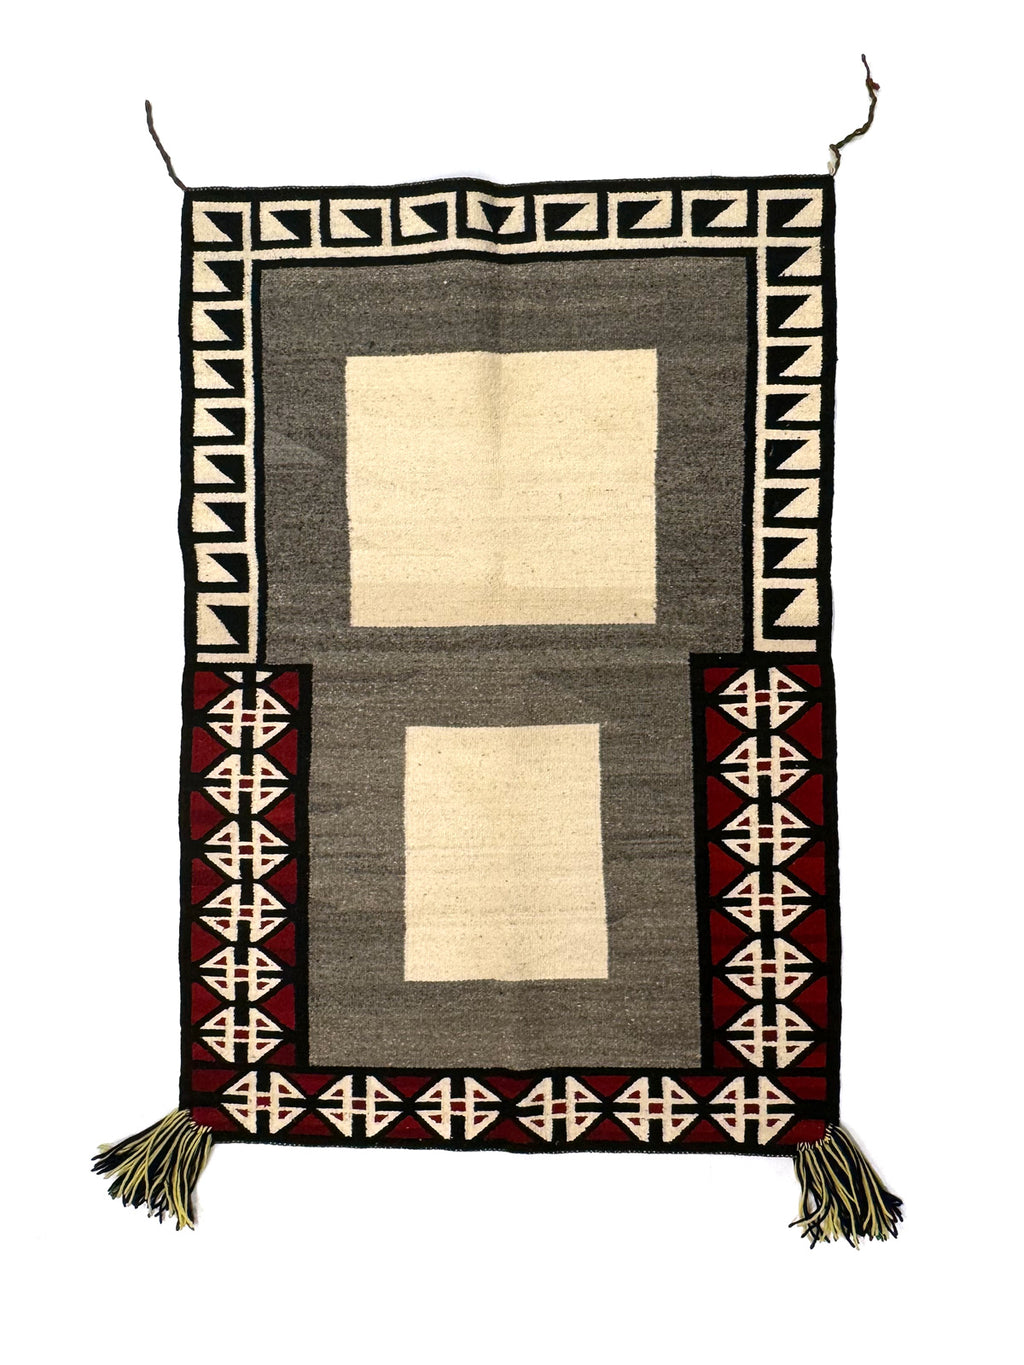 Navajo Double Saddle Blanket c. 1930s, 50" x 35"